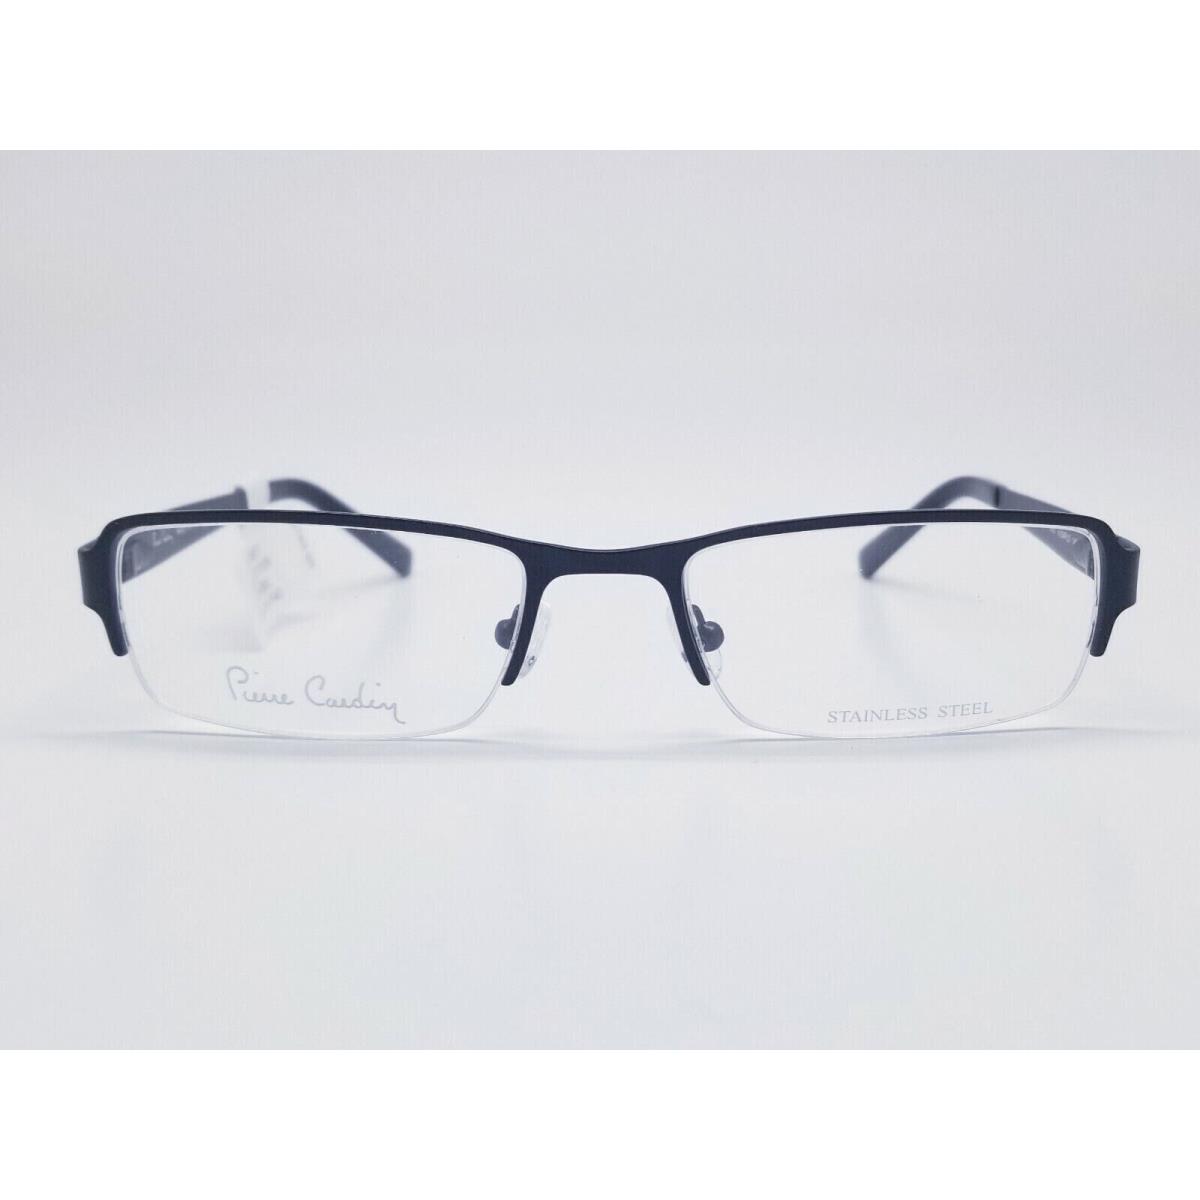 1 Unit Pierre Cardin Satin Black Eyeglass Frame 53-19-140 418